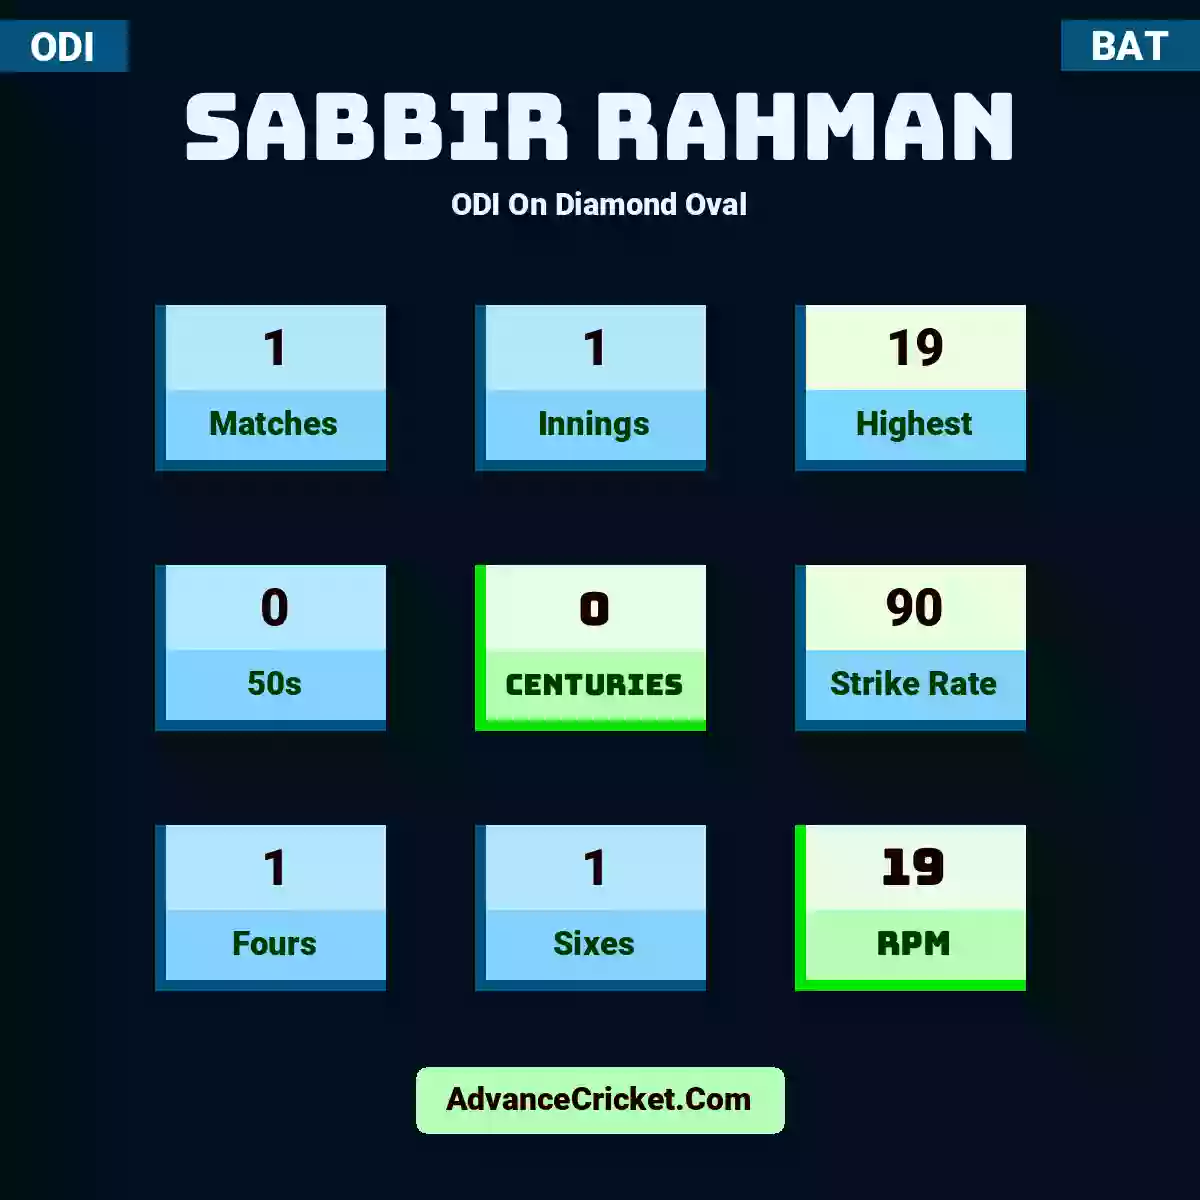 Sabbir Rahman ODI  On Diamond Oval, Sabbir Rahman played 1 matches, scored 19 runs as highest, 0 half-centuries, and 0 centuries, with a strike rate of 90. S.Rahman hit 1 fours and 1 sixes, with an RPM of 19.